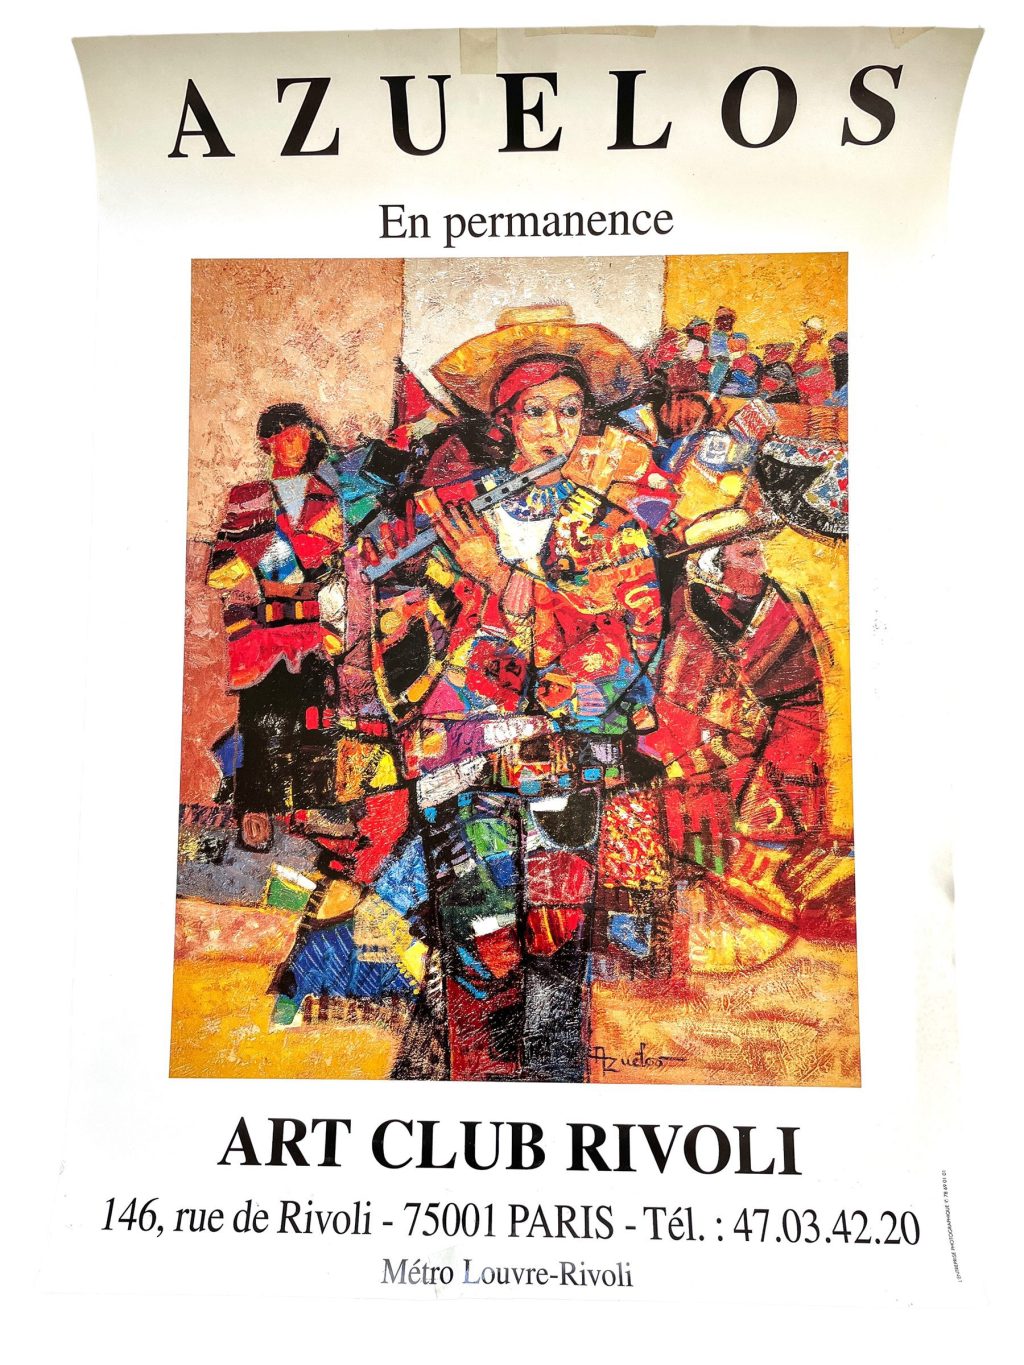 Vintage French Azuelos Galerie Rivoli Paris Gallery Original Exhibition Poster Wall Decor Painting c1997 / EVE